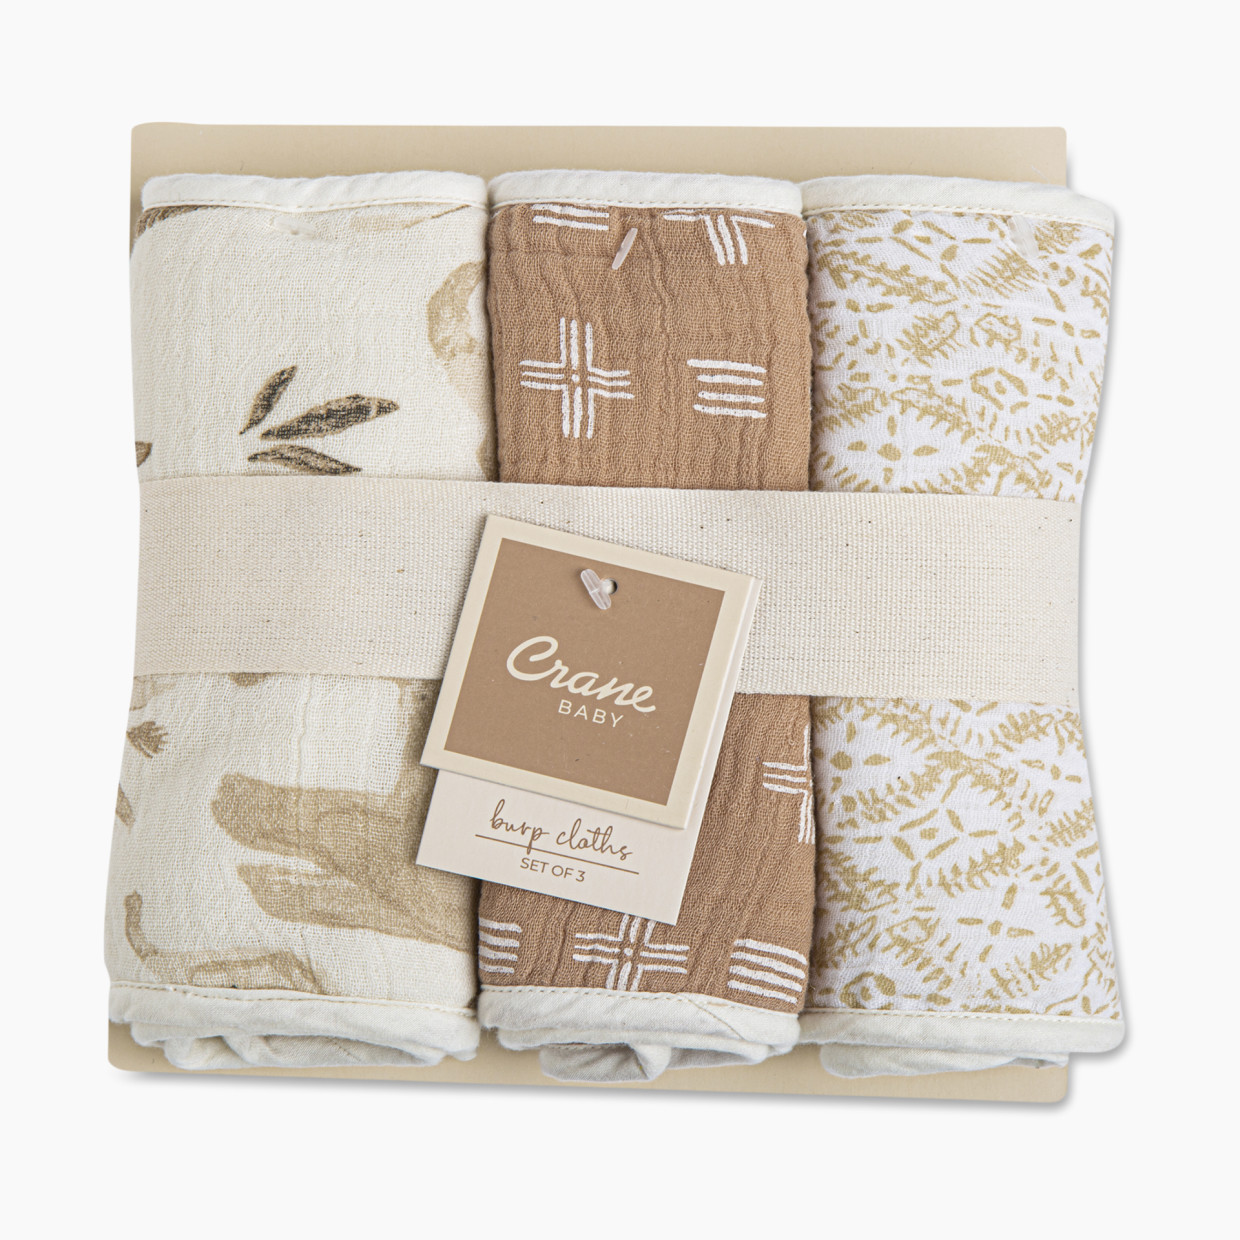 Crane Baby Cotton Muslin and Terry Burp Cloth Set (3 Pack) - Kendi.